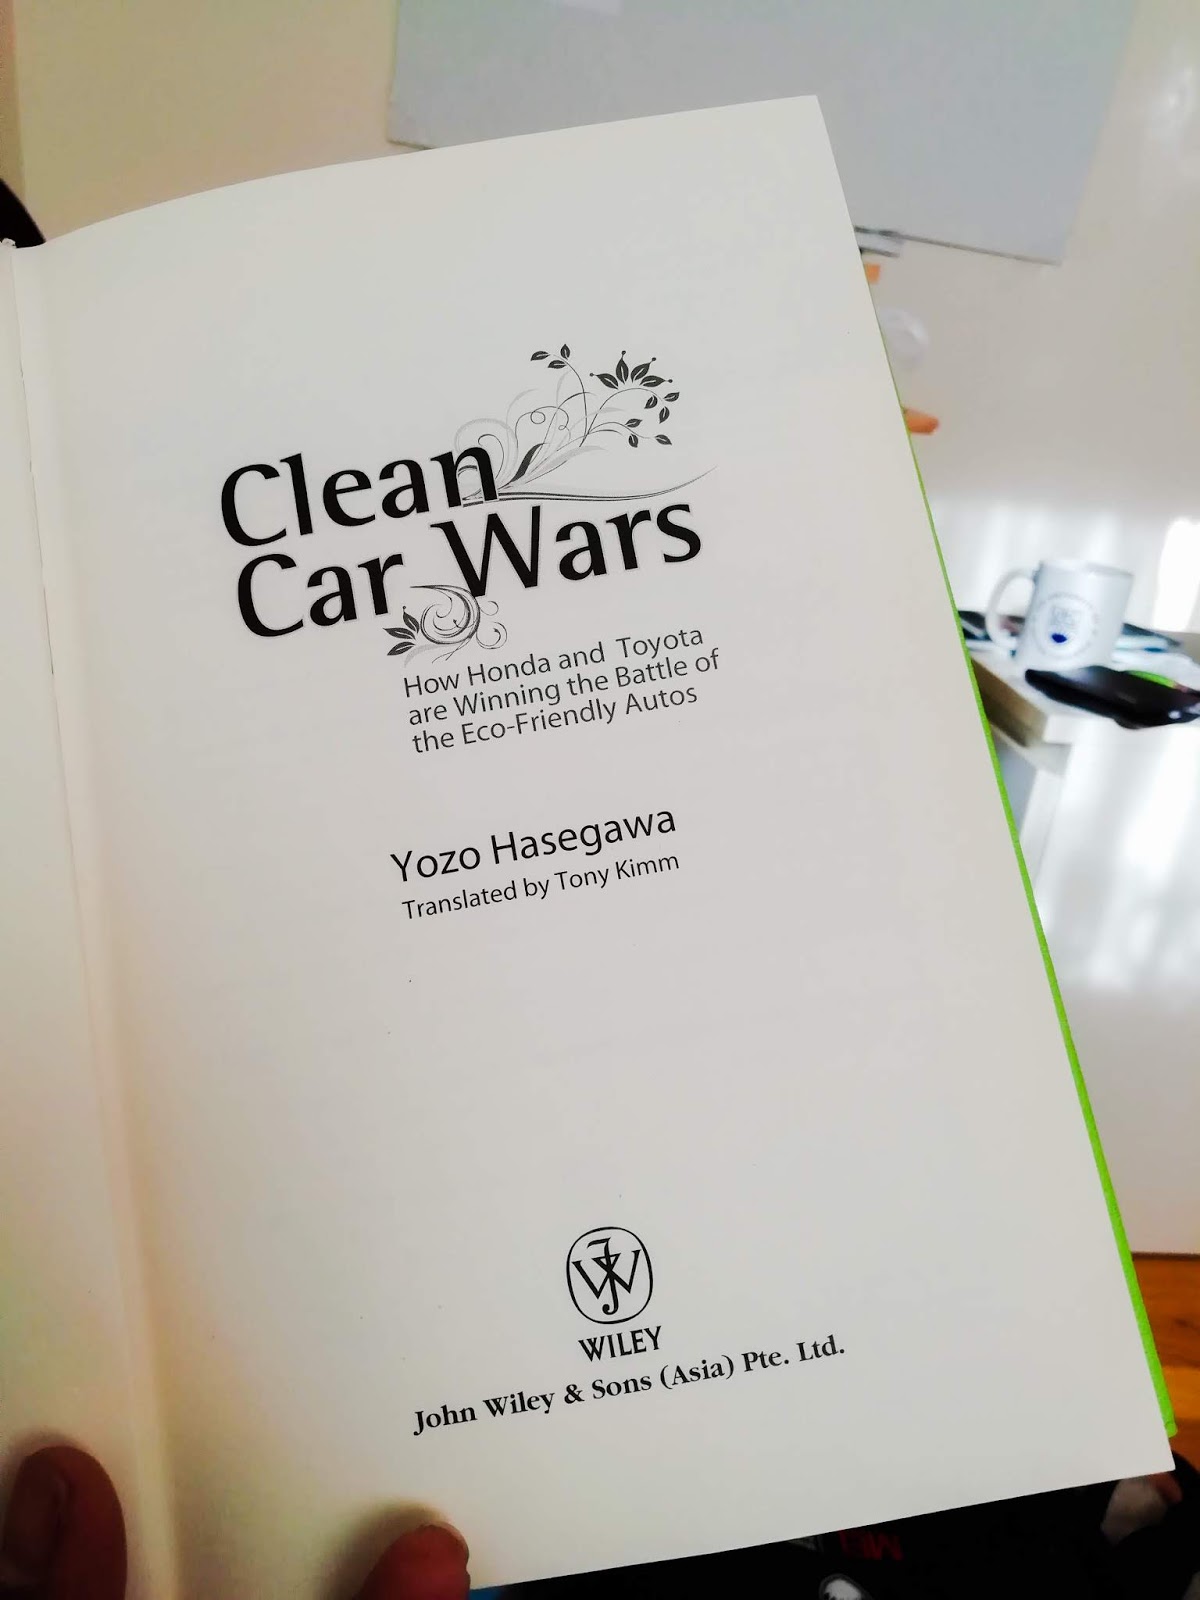 Book Post 4 : “Clean Car Wars” by Yozo Hasegawa and translated by Tony Kimm